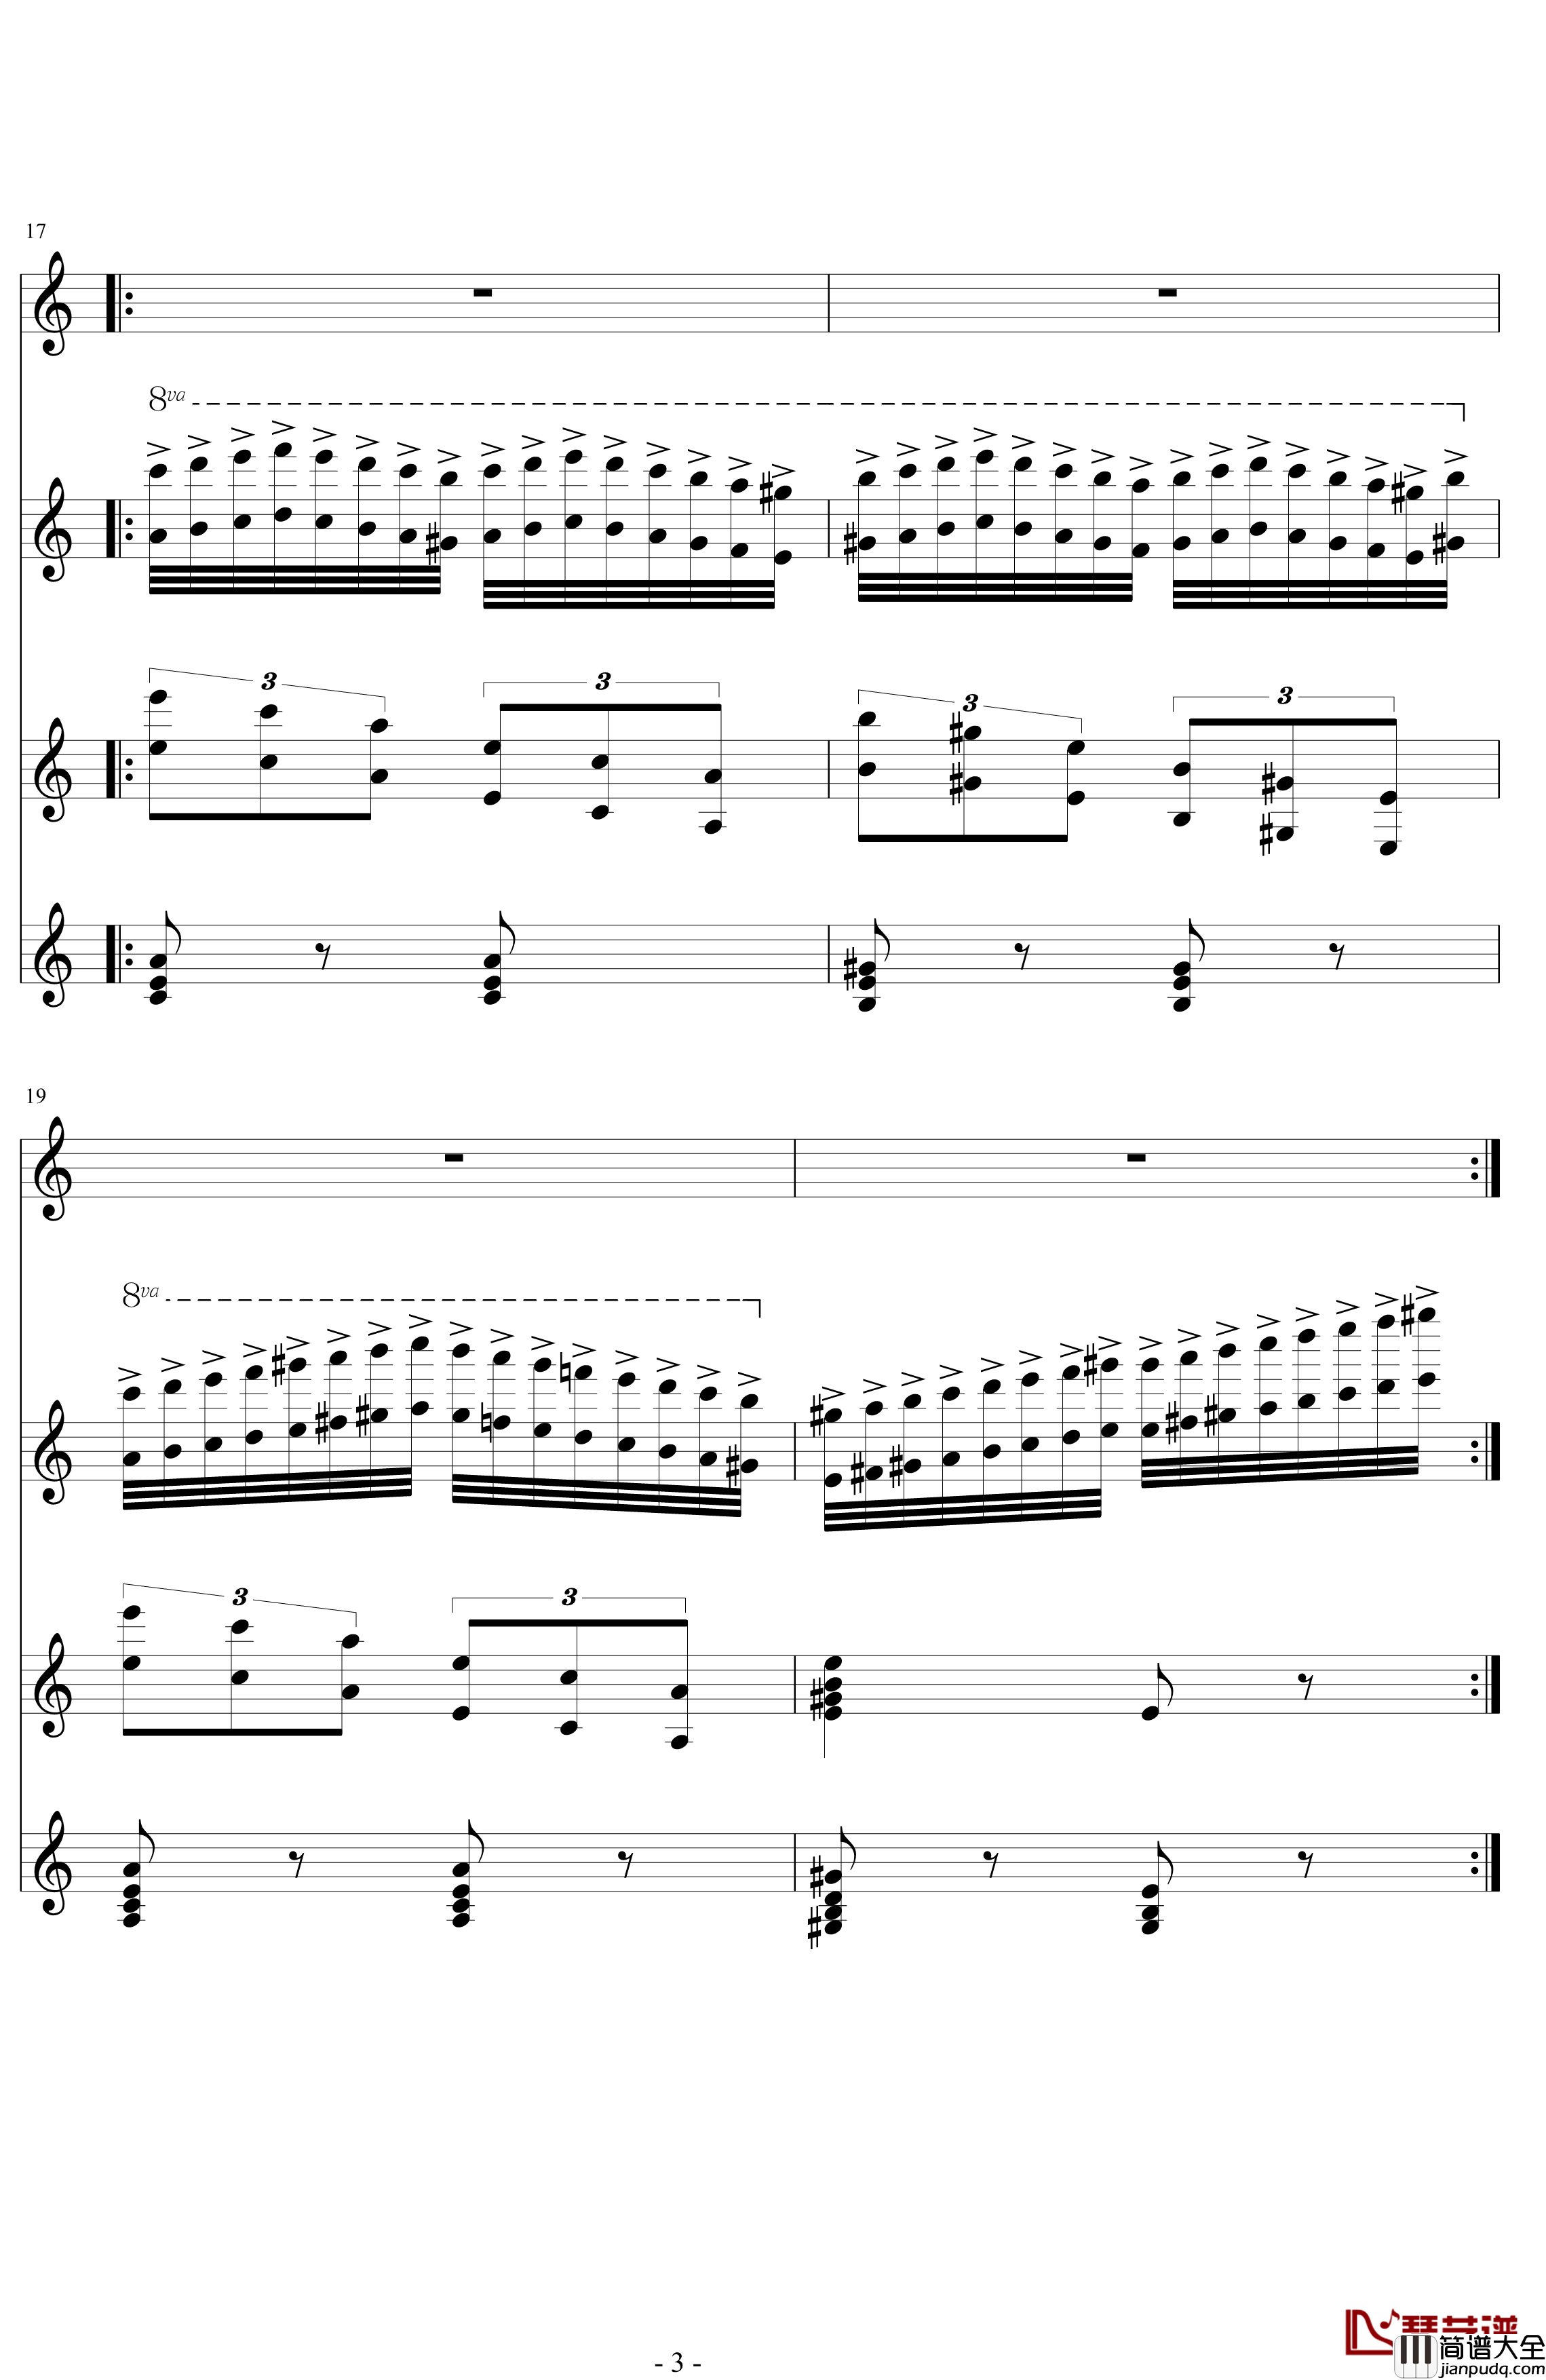 my_Edition_of_Paganini'theme钢琴谱_未知分类